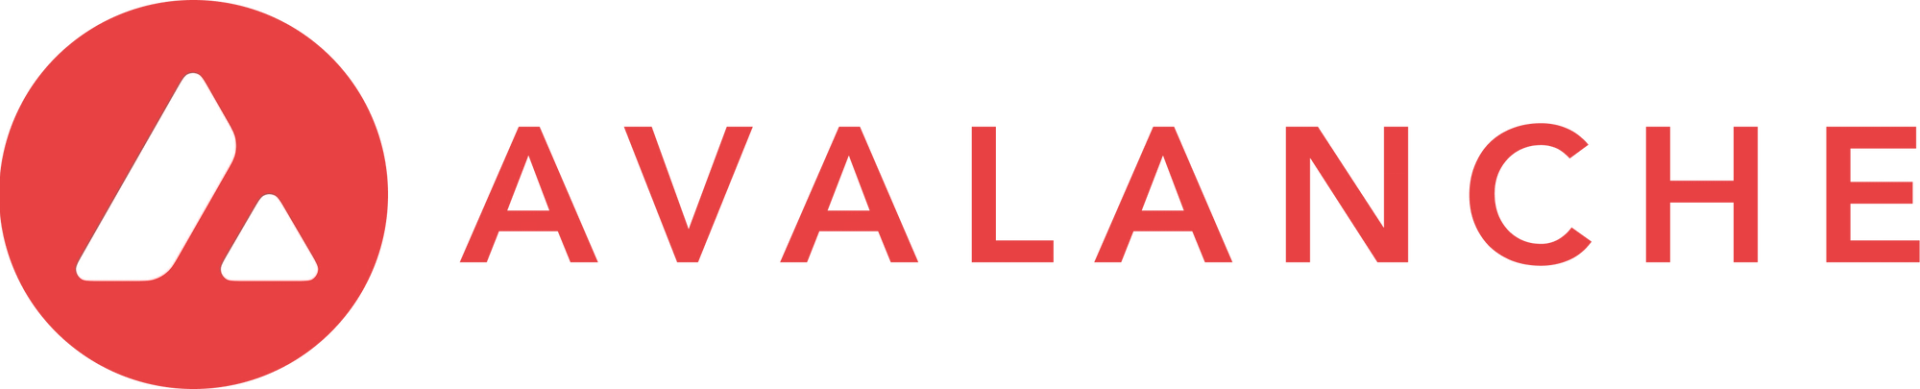 Ava Labs Elevates Branding With AI-Driven Design